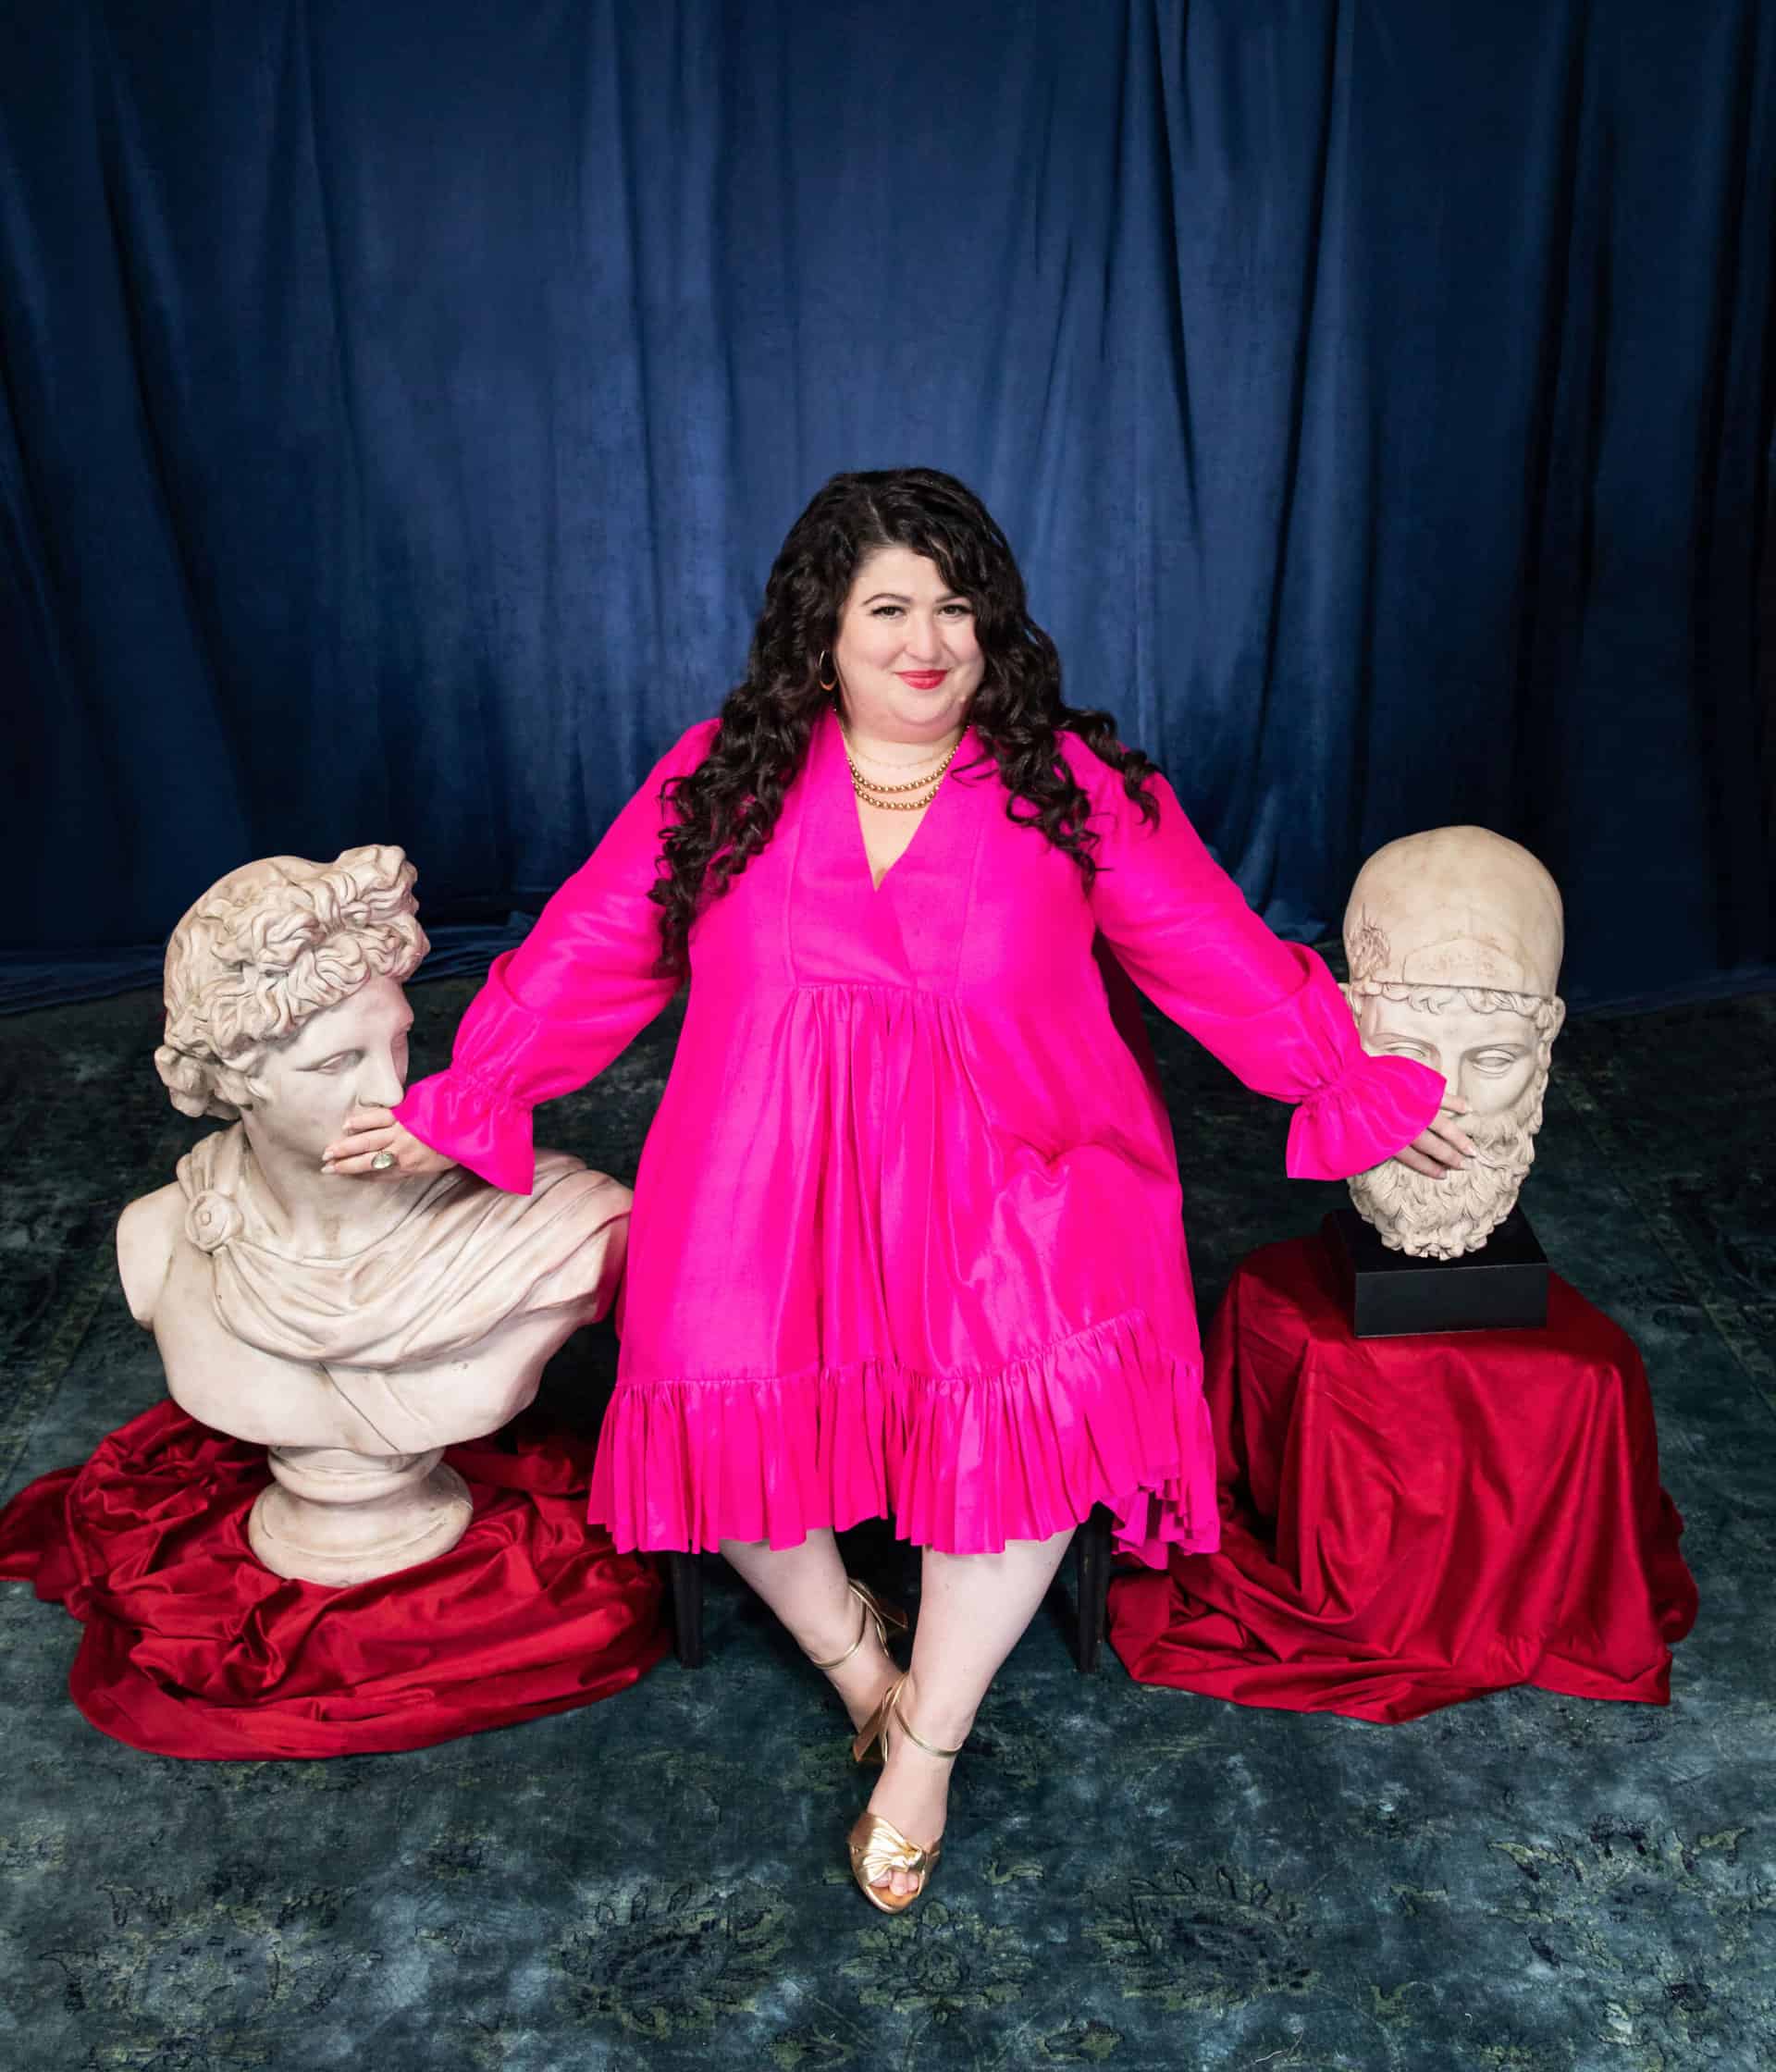 Kara Loewentheil sitting between two sculpture busts in a pink dress.